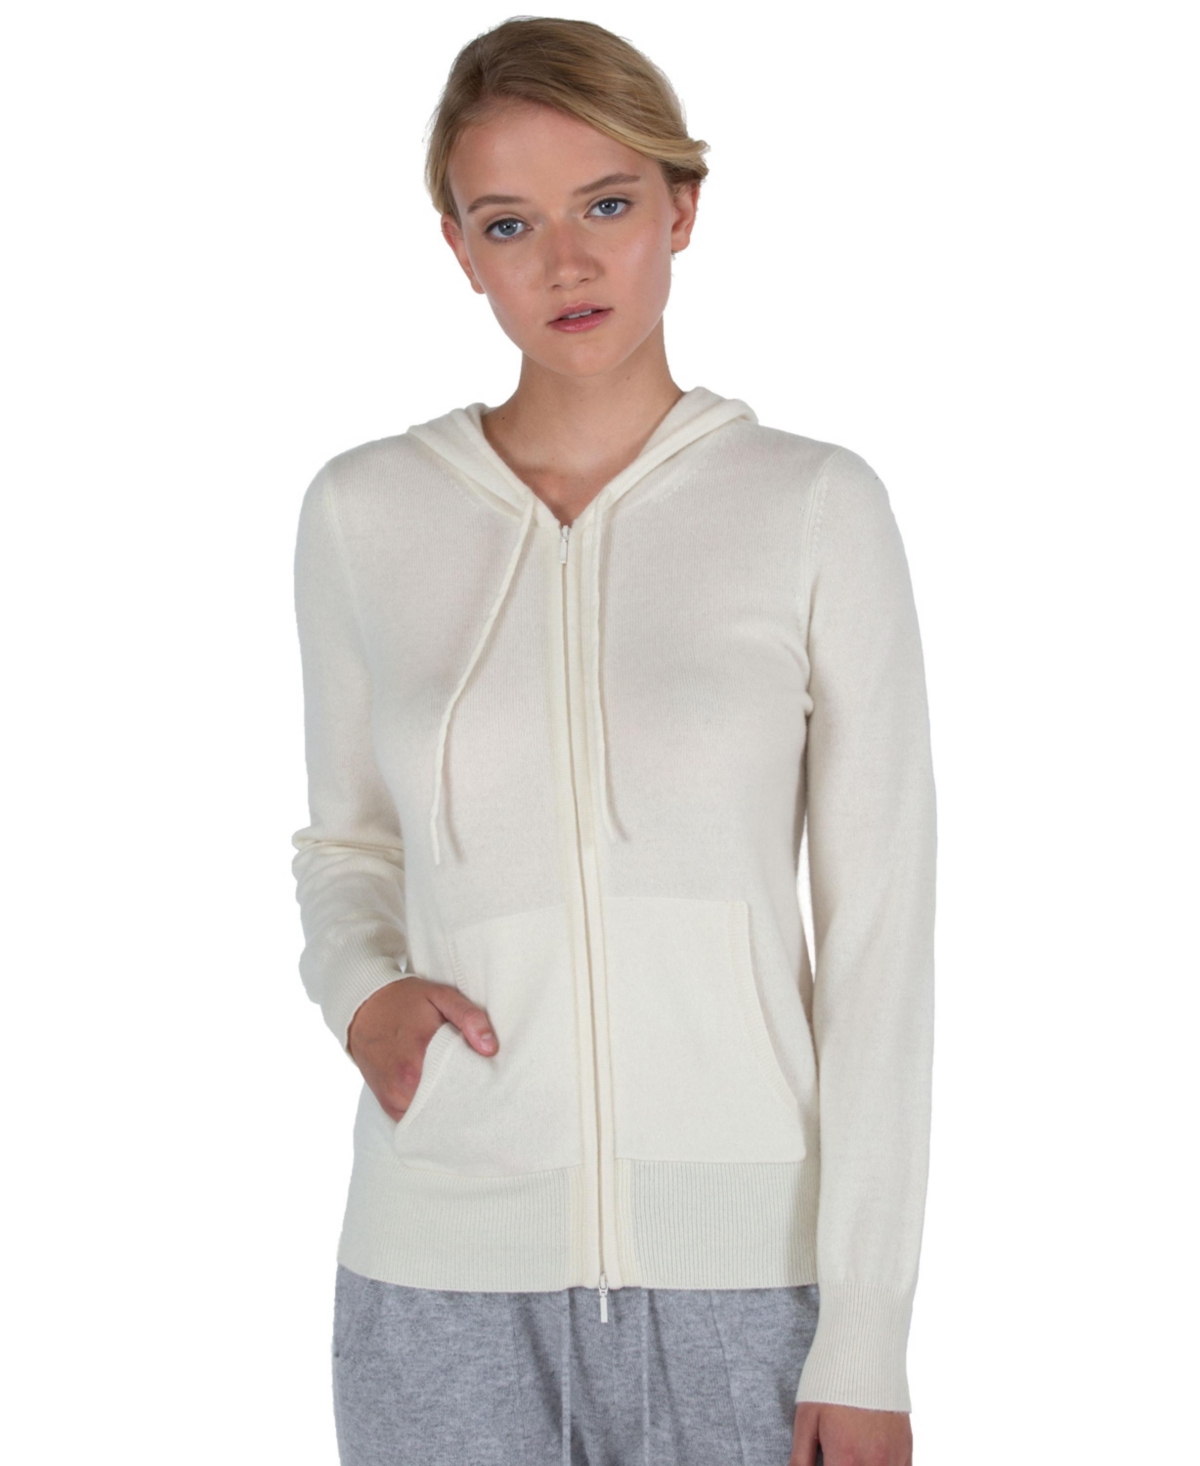 Women's 100% Pure Cashmere Long Sleeve Zip Hoodie Cardigan Sweater (1573, Petal Pink, Large ) - Petal pink